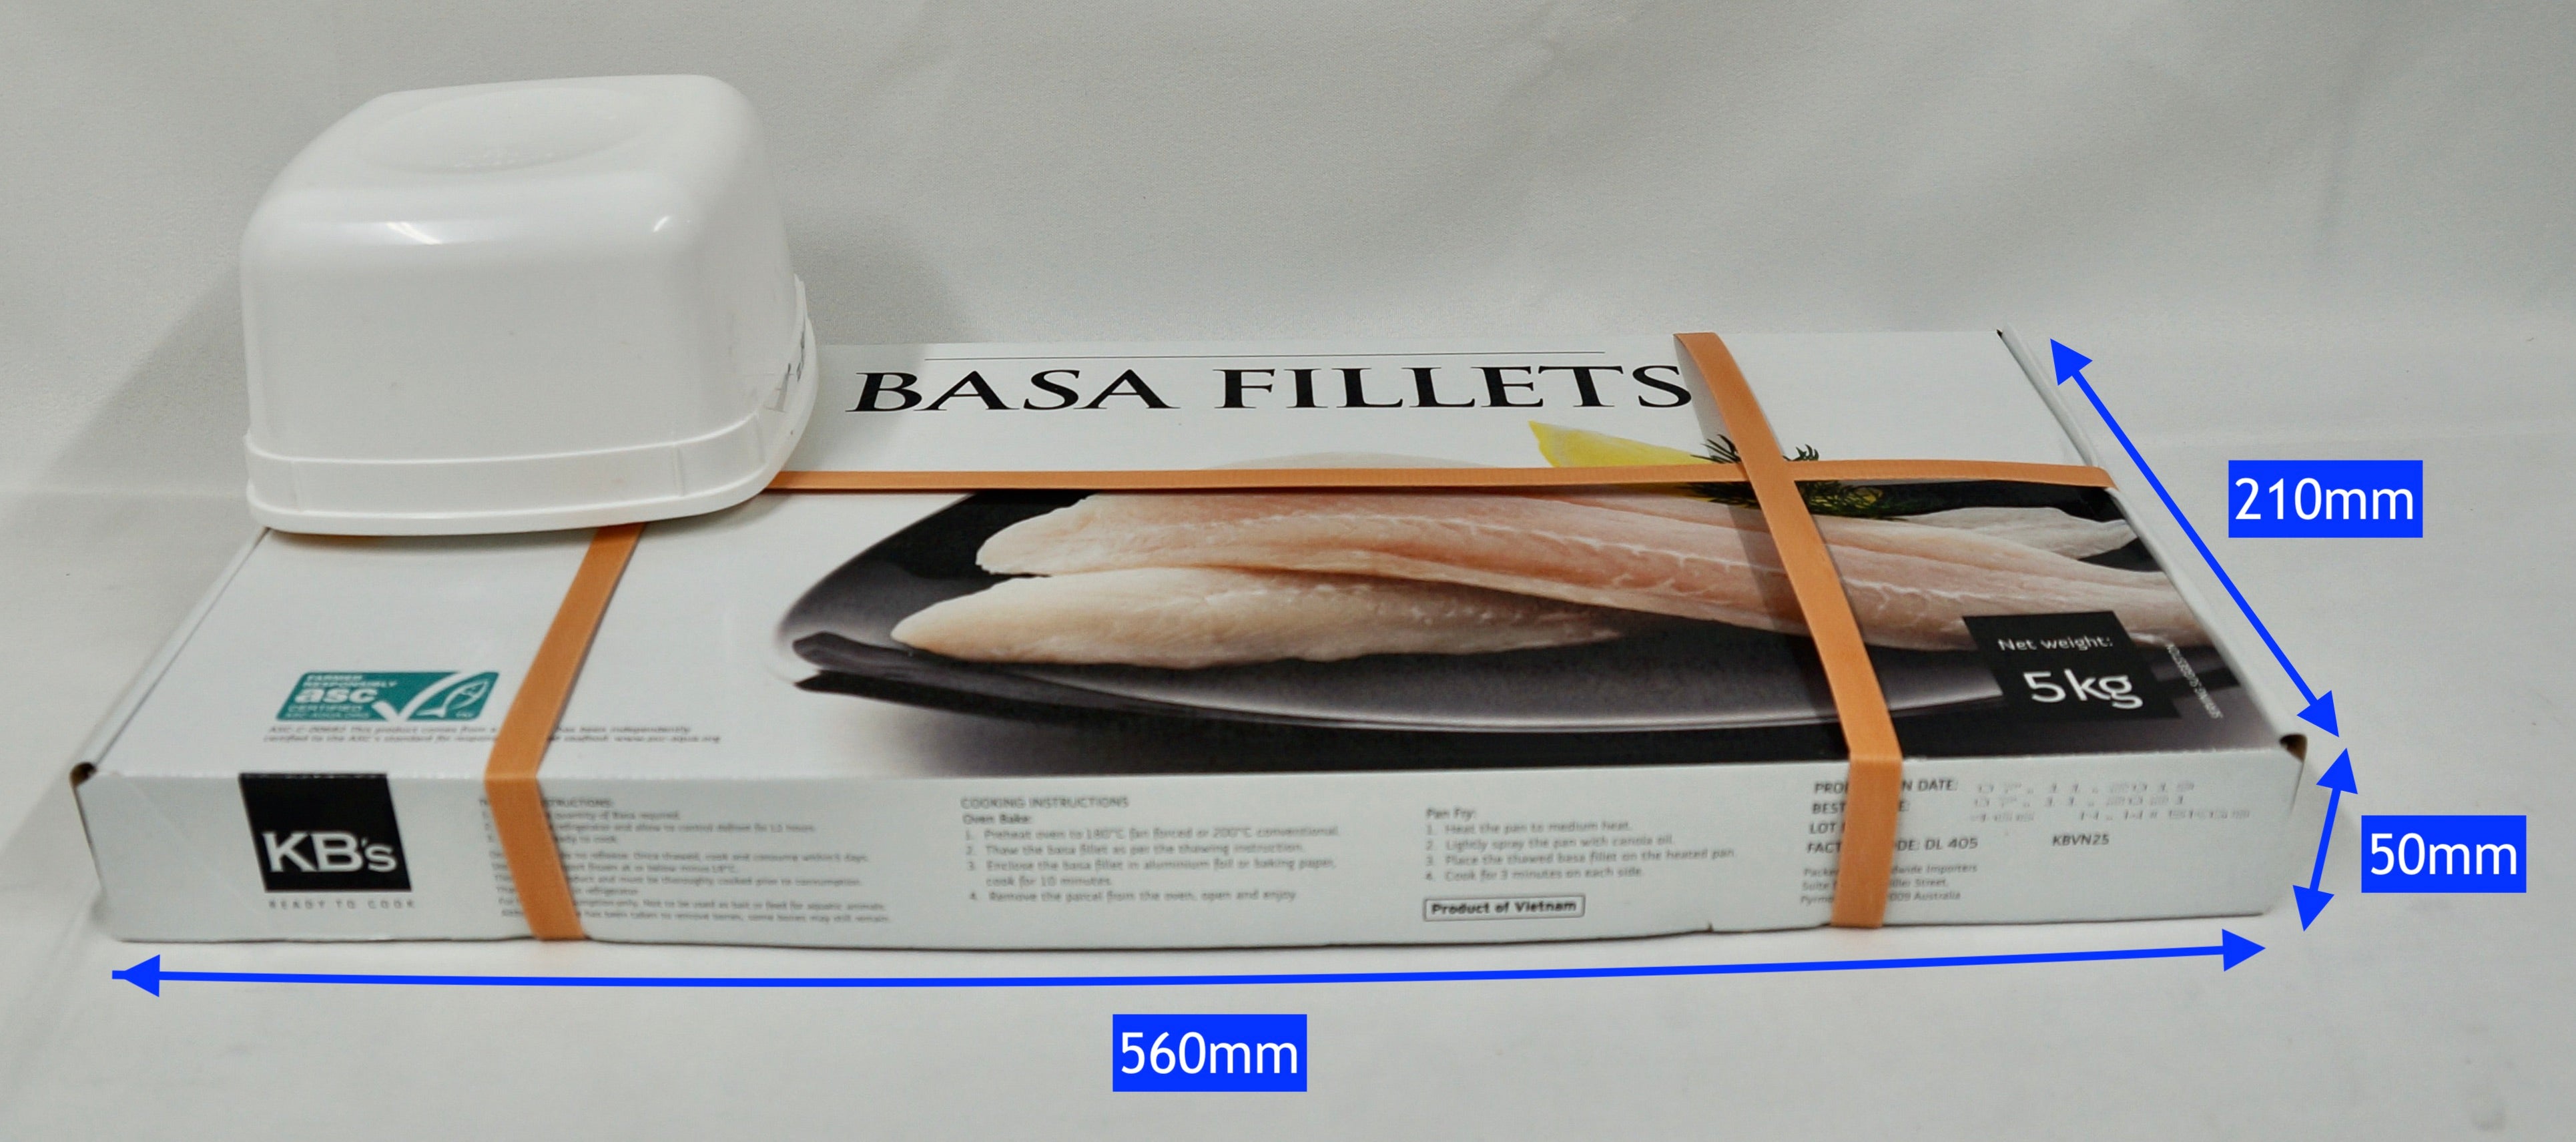 basa fillet carton with dimensions